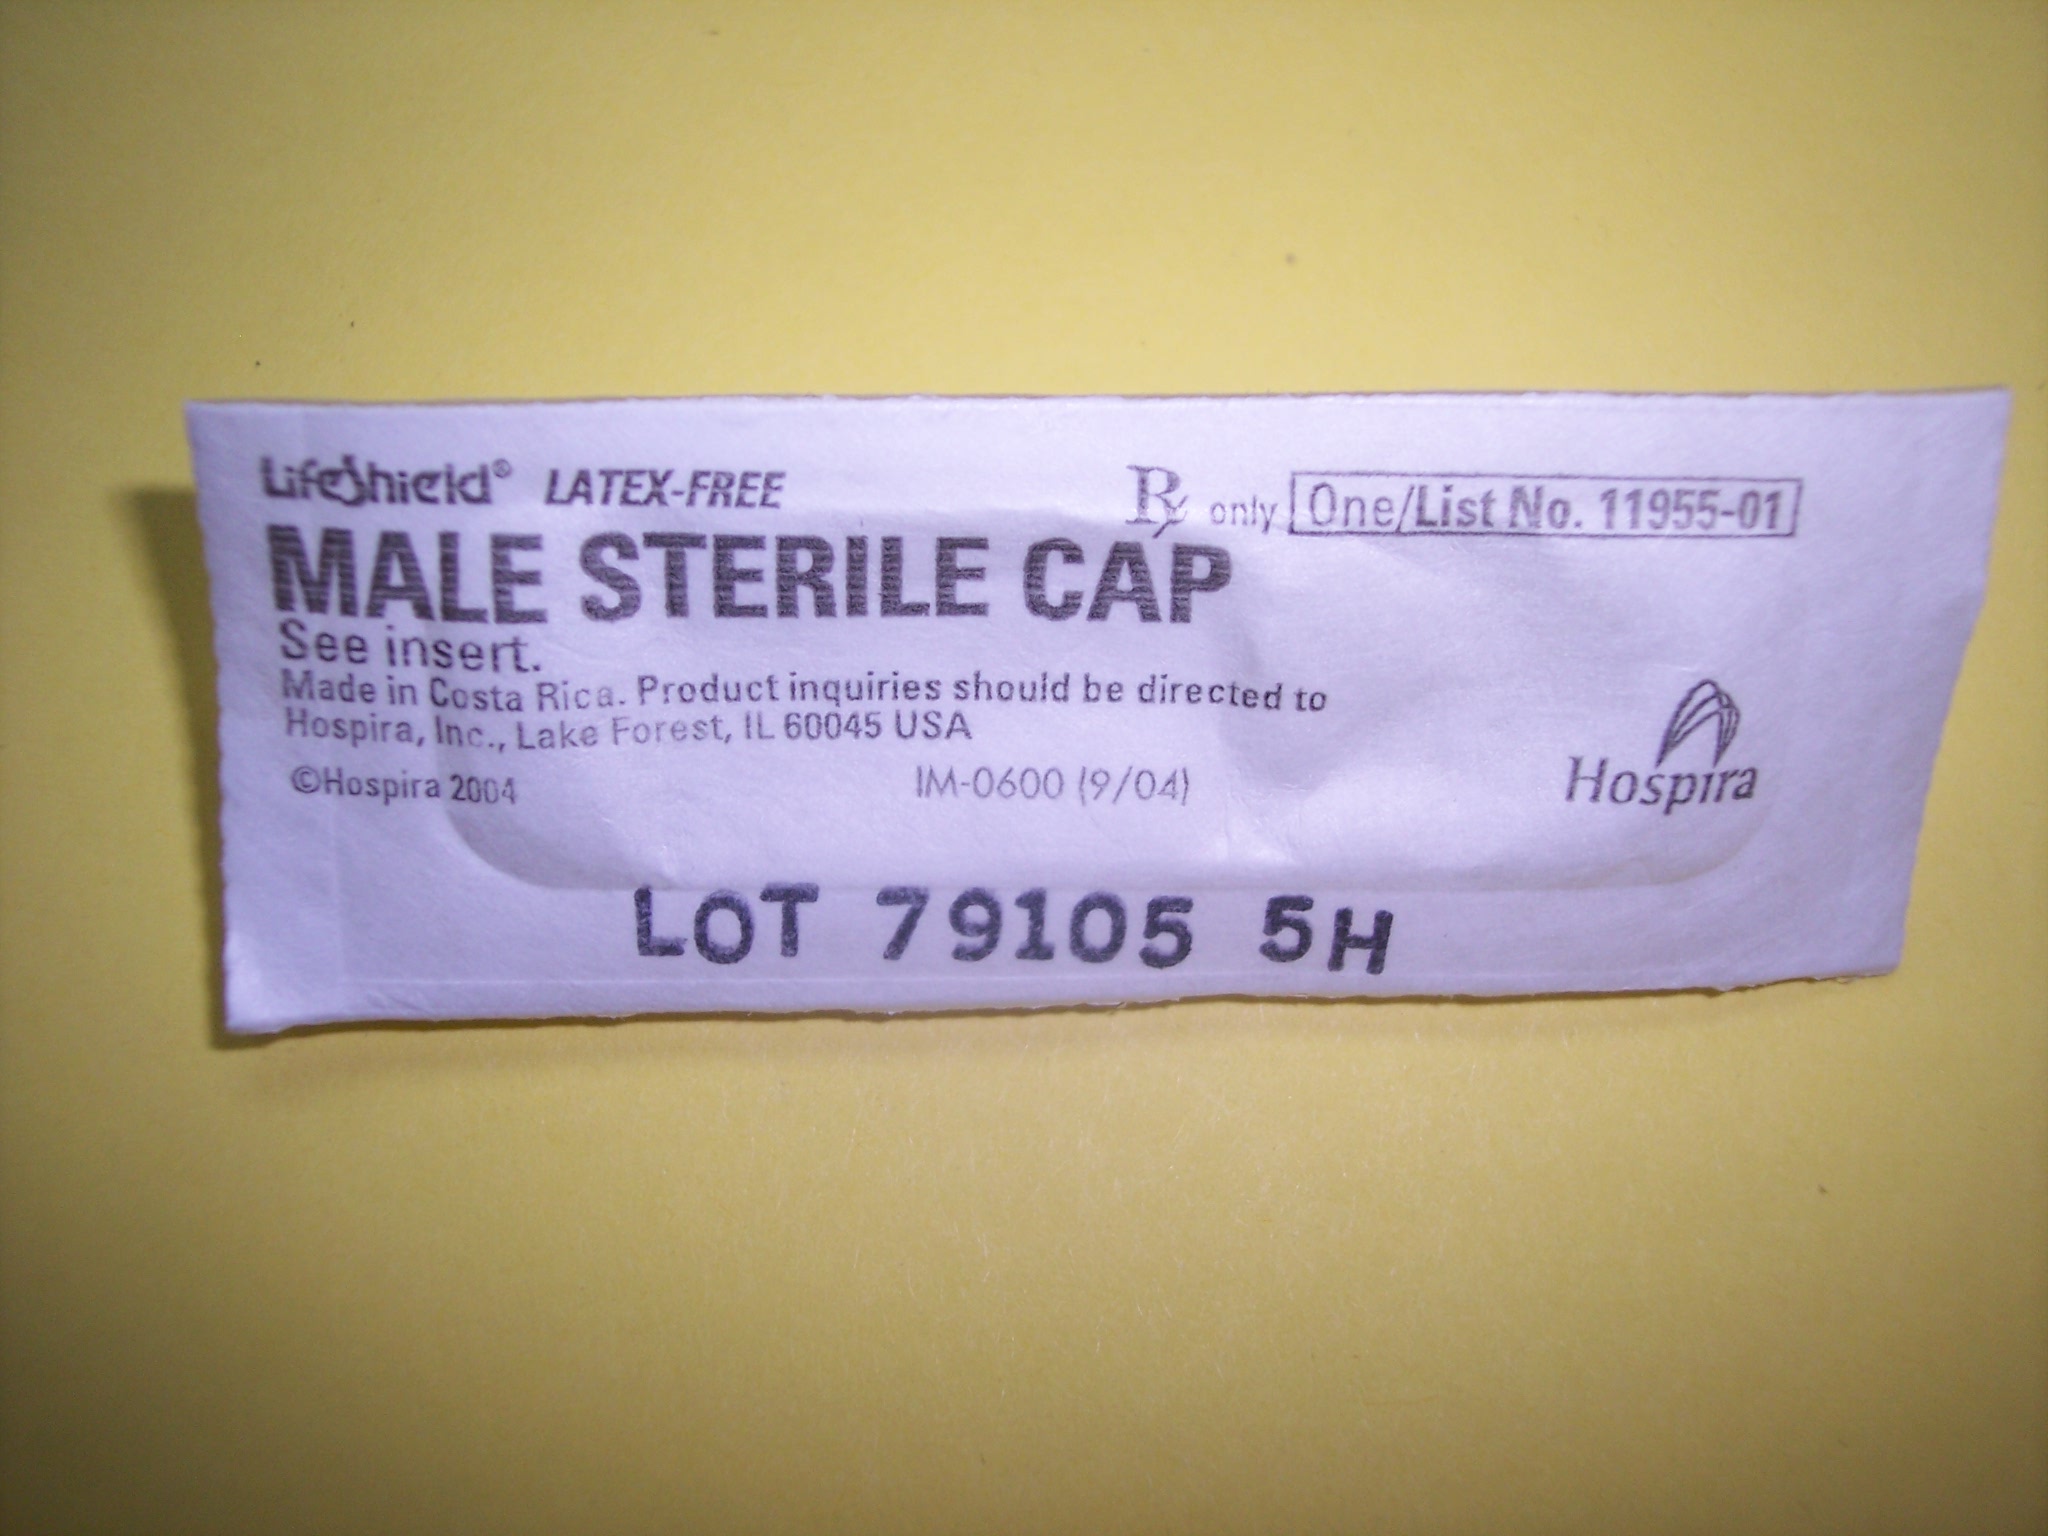 Hospira LifeShield 11955-01 Male Steril